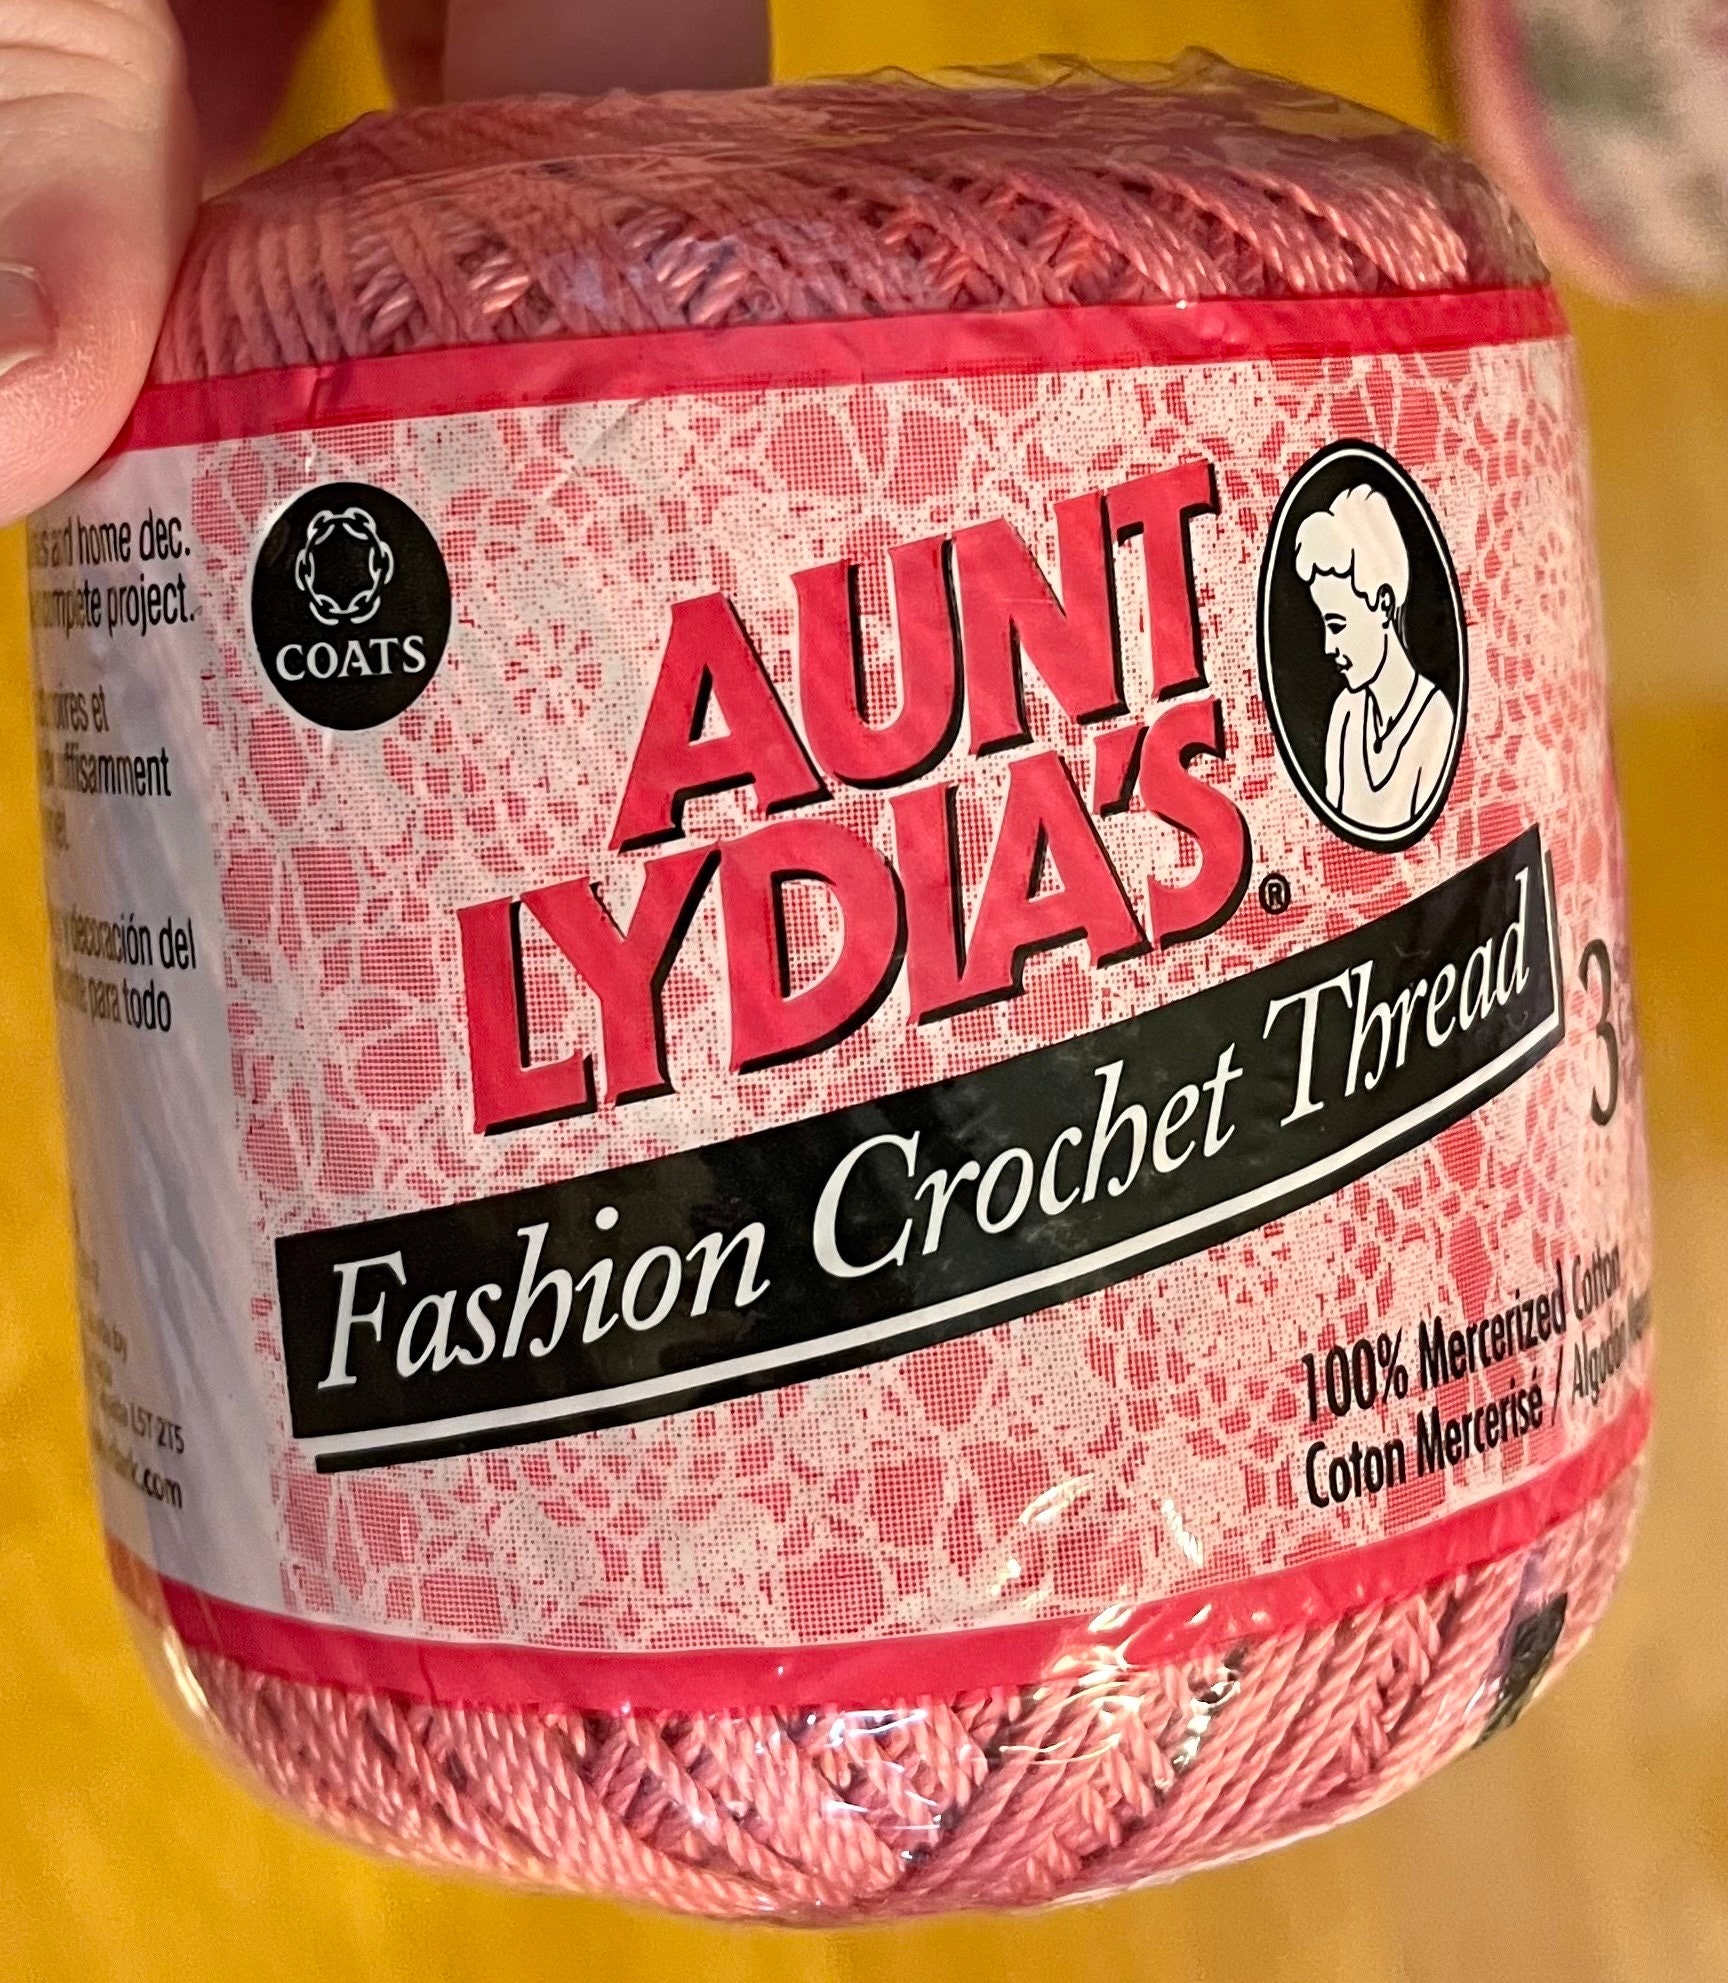 Aunt Lydia Crochet Thread Size 3 